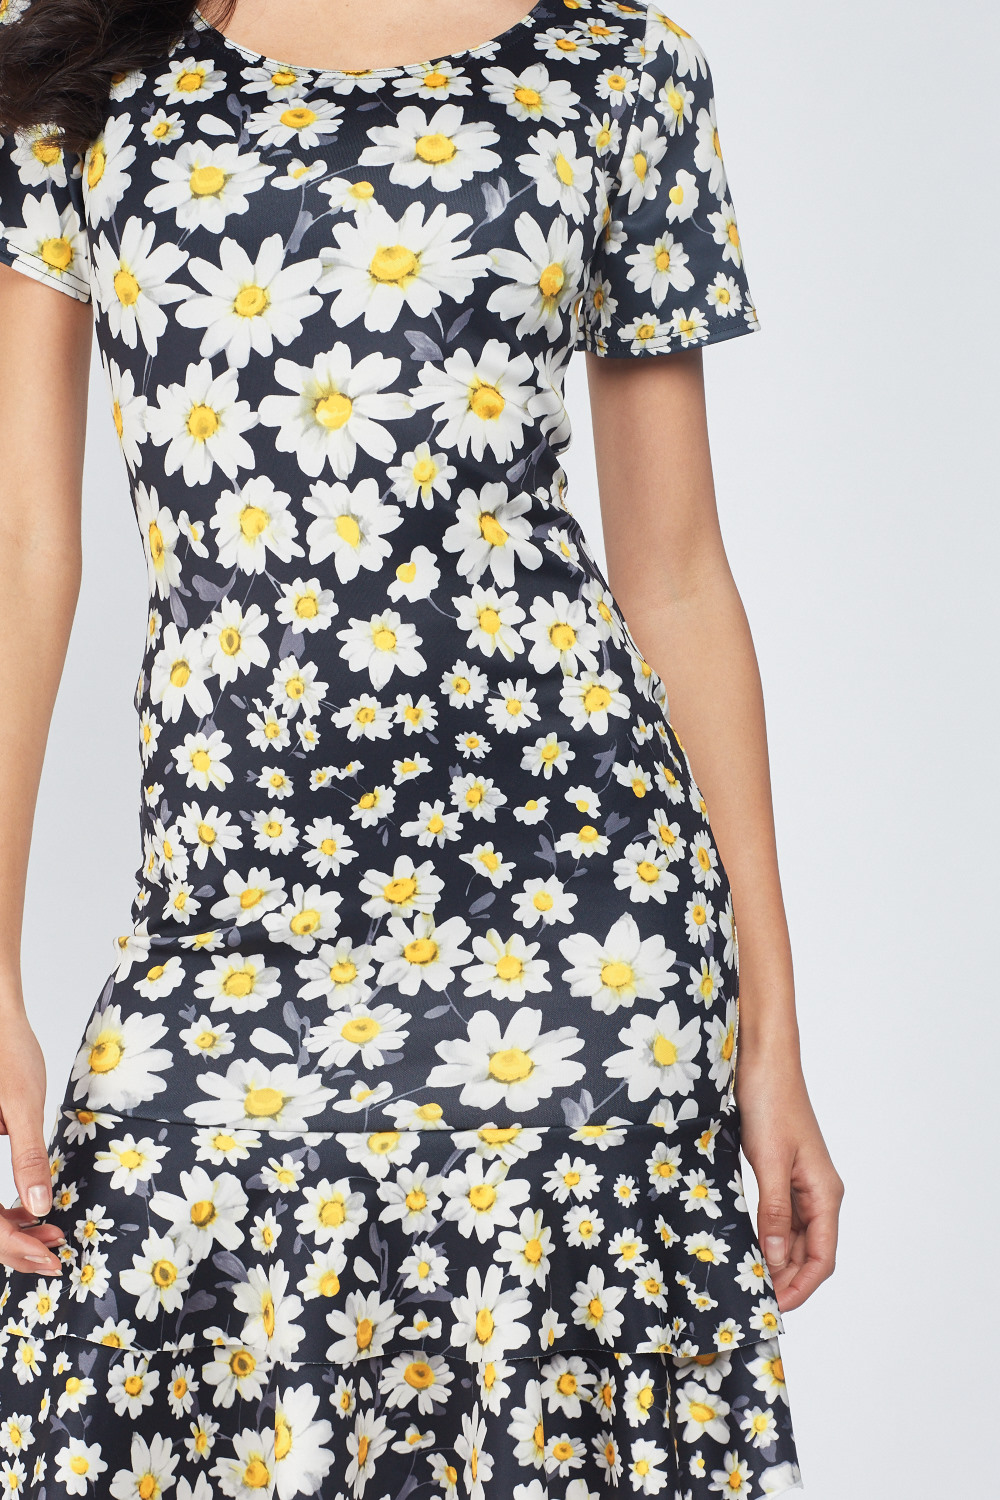 Daisy Flower Print Tiered Dress - Just $3